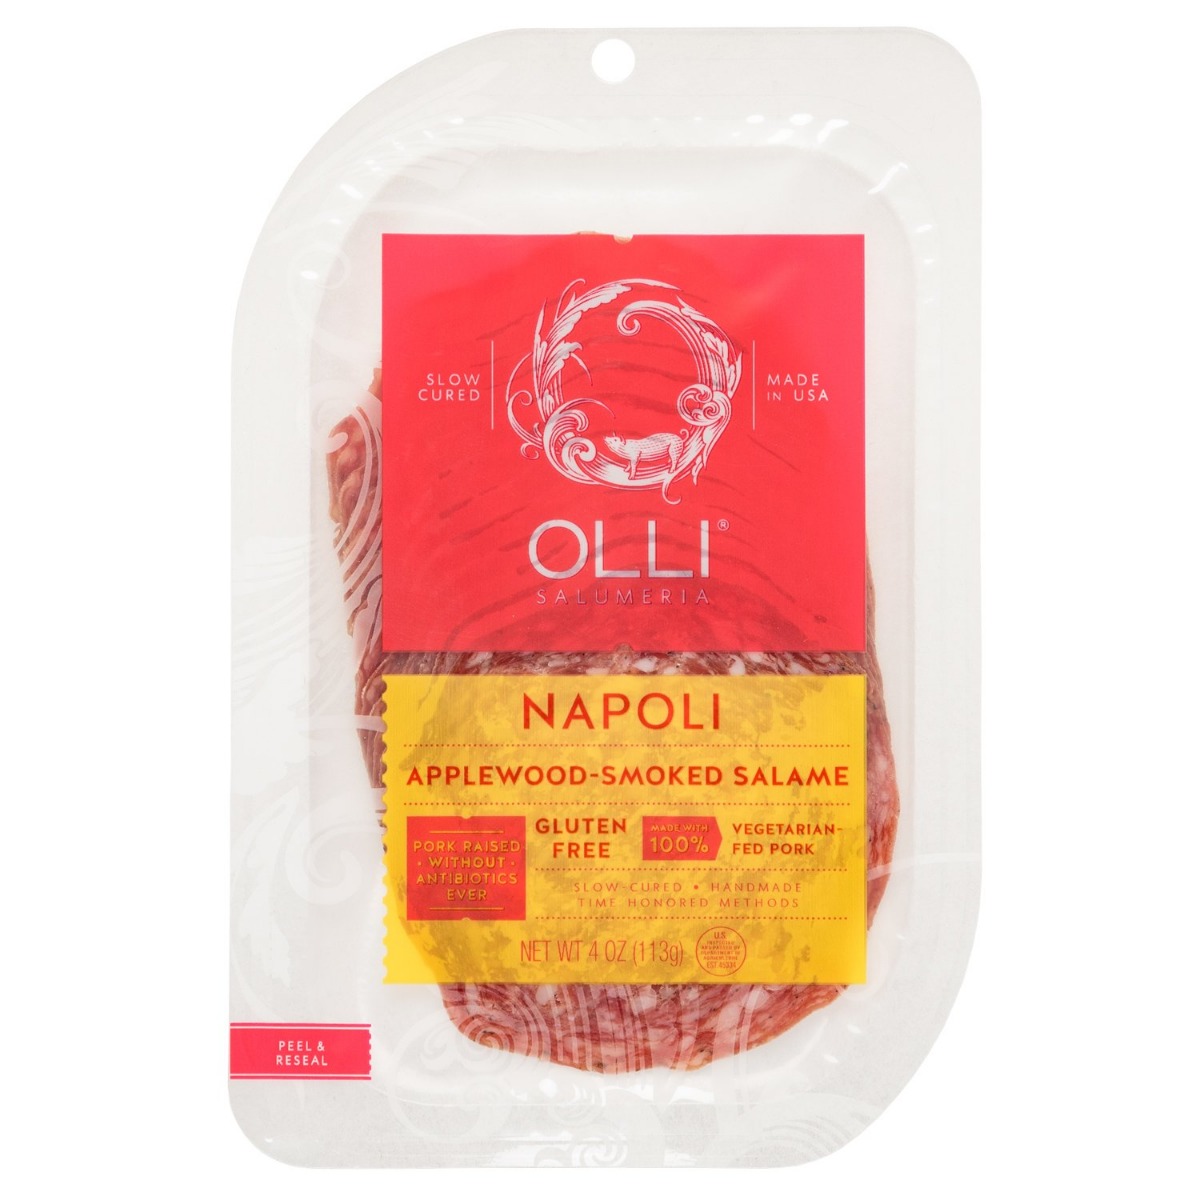 OLLI SALUMERIA: Napoli Applewood-Smoked Salame Pre-Sliced, 4 oz - 0813039020082